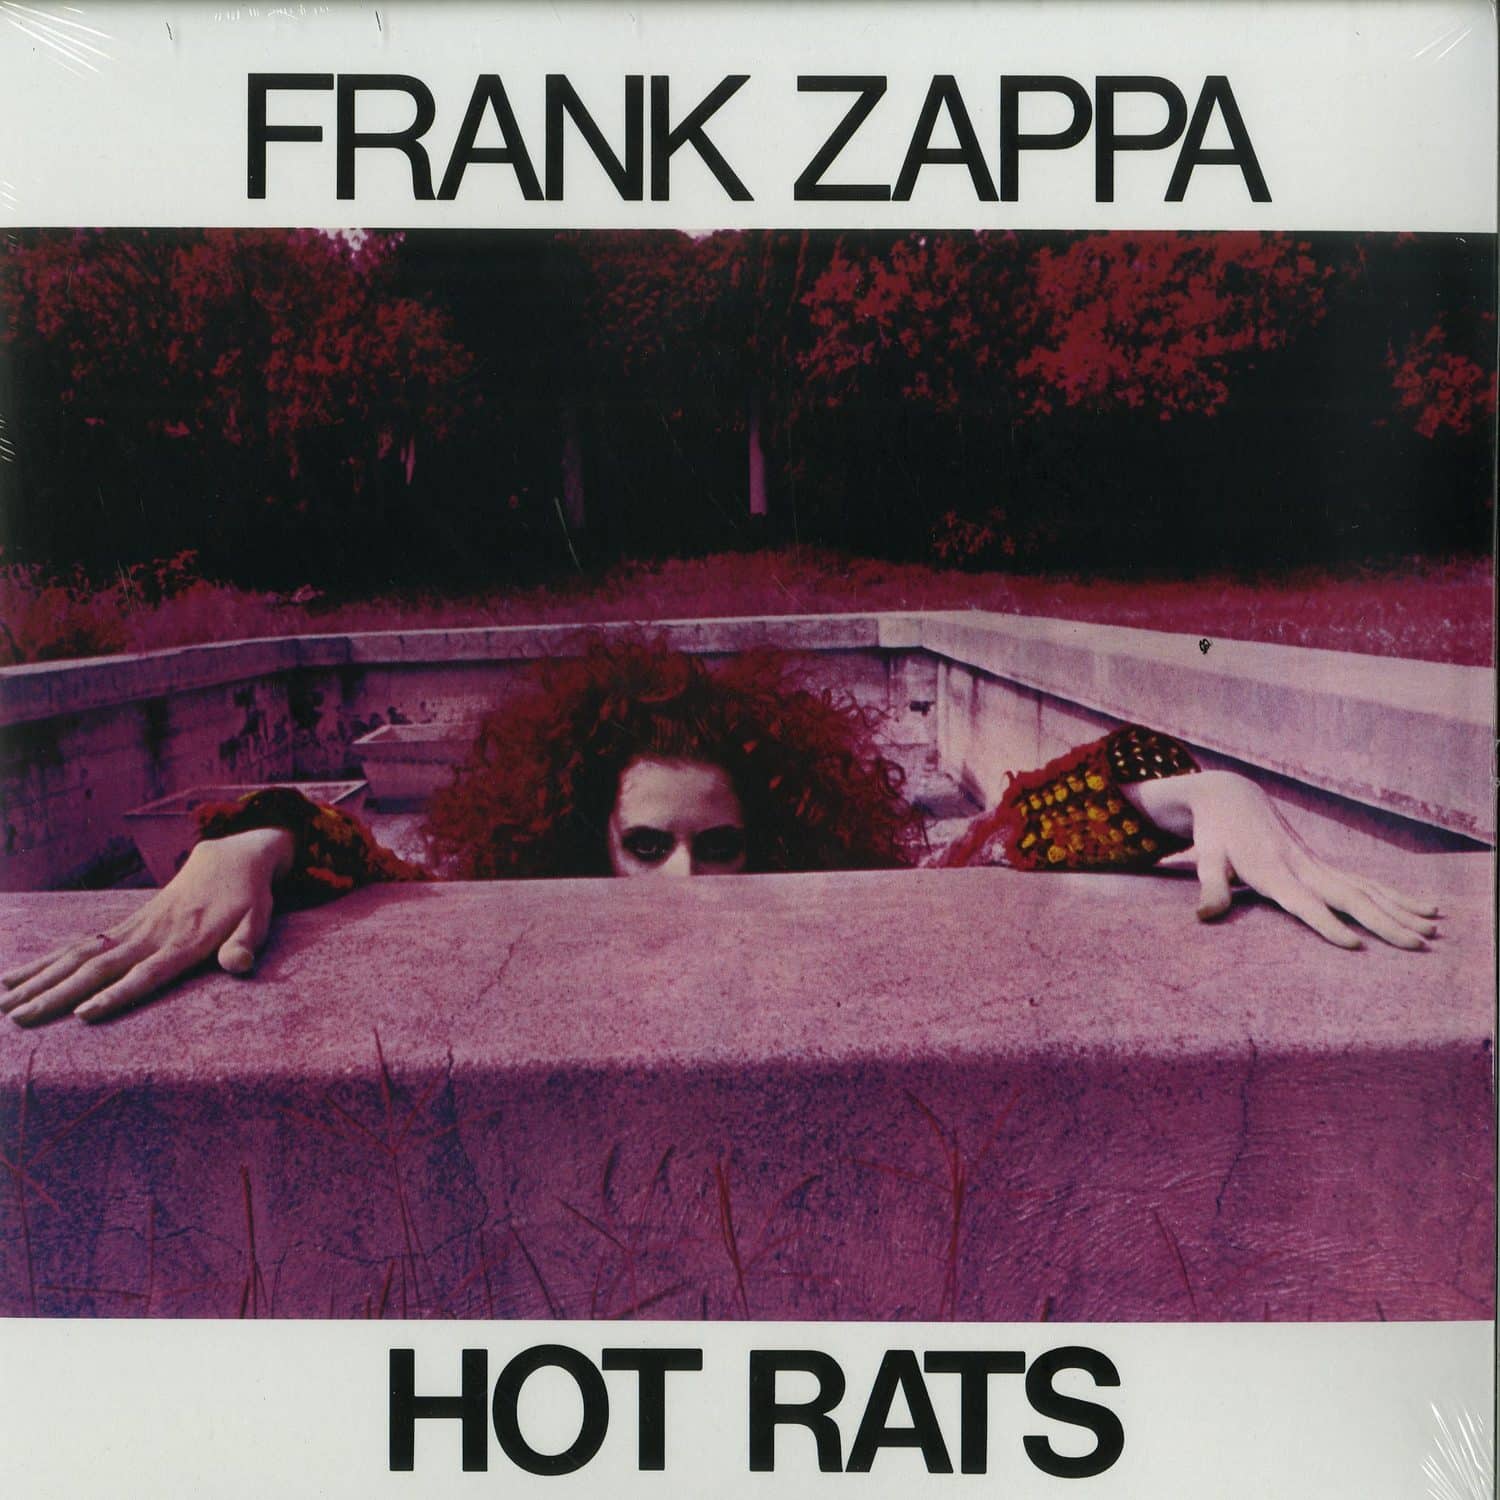 Frank Zappa - HOT RATS 